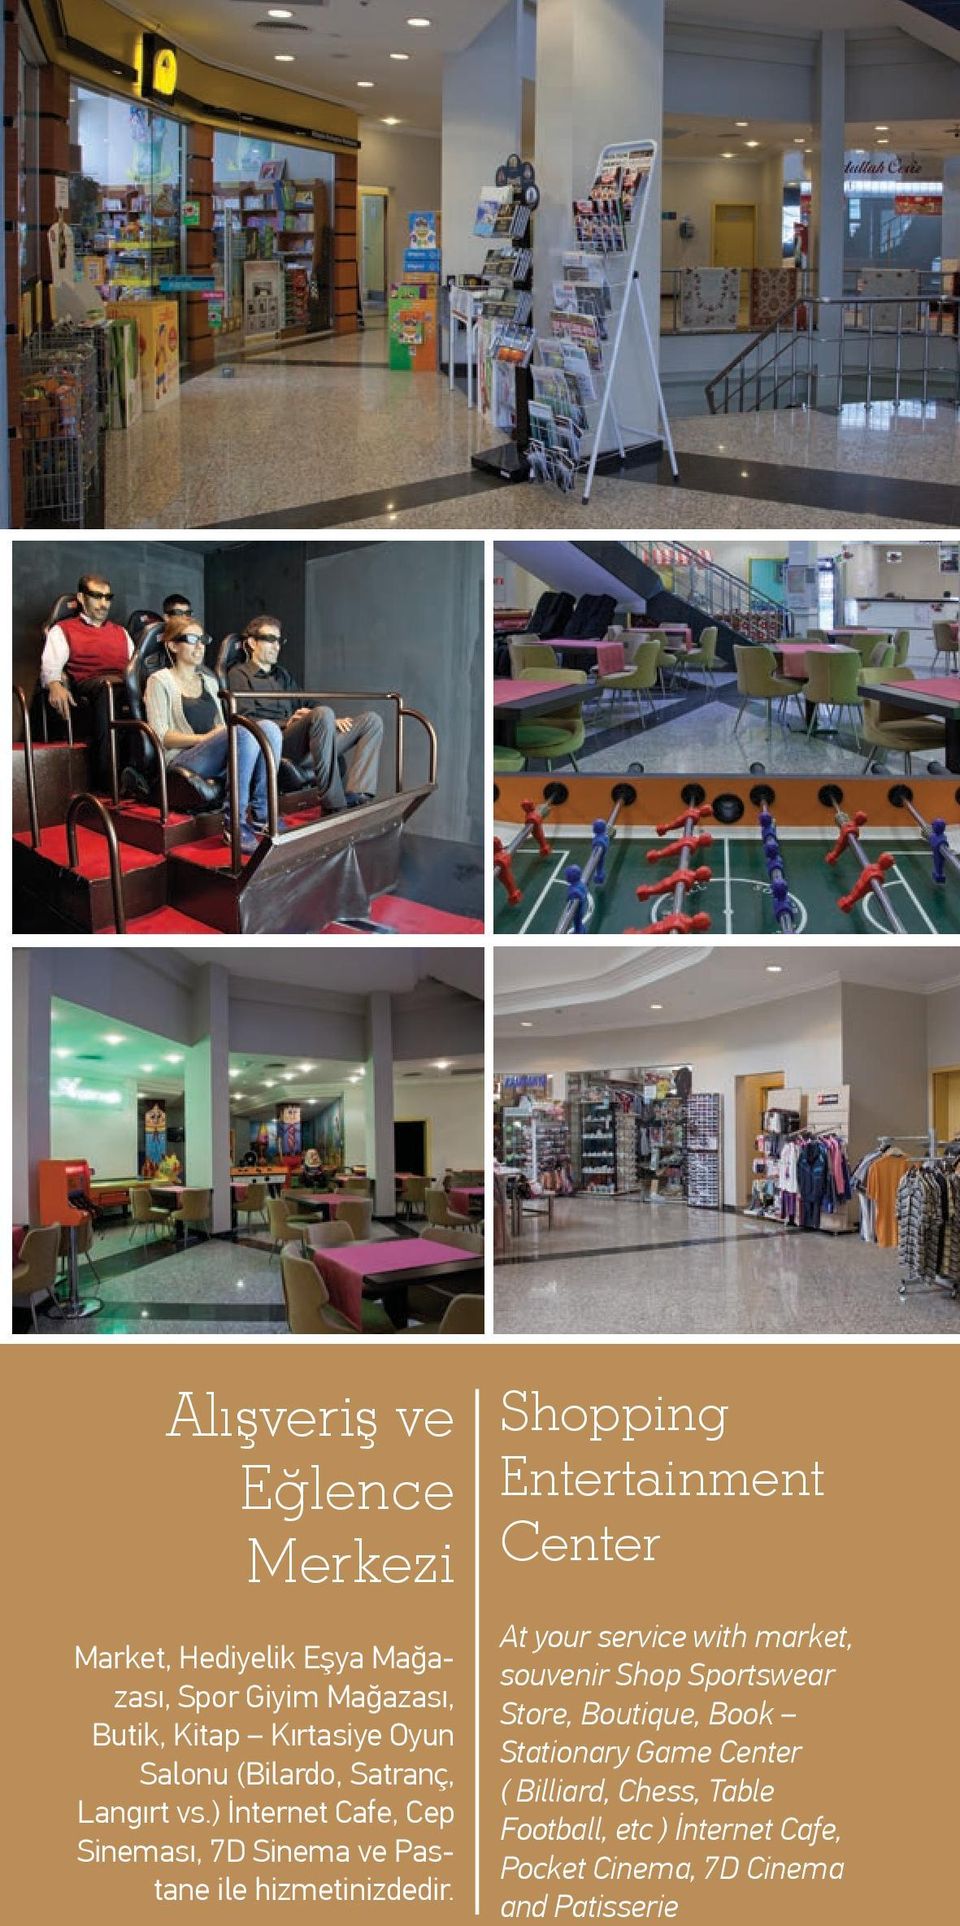 Shopping Entertainment Center At your service with market, souvenir Shop Sportswear Store, Boutique, Book